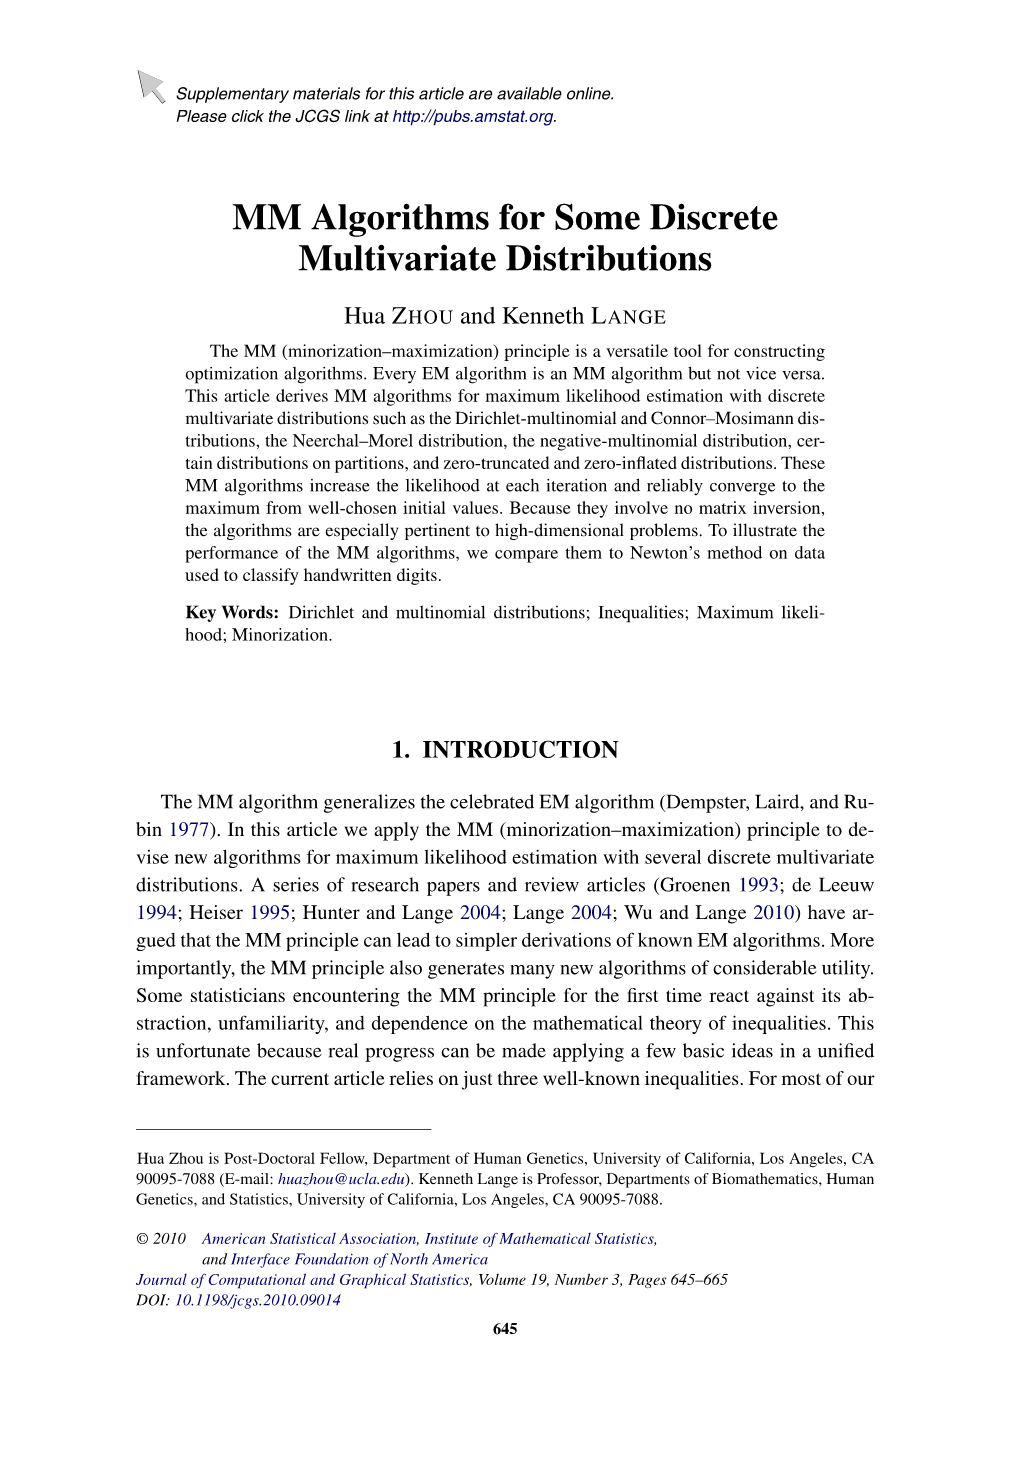 MM Algorithms for Some Discrete Multivariate Distributions